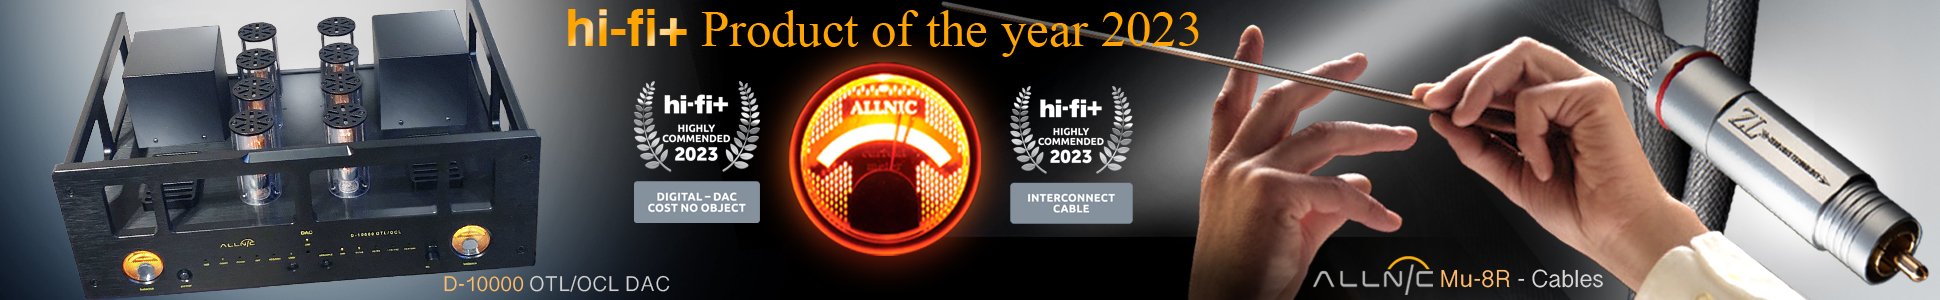 Allnic audiogon Banner prod of year.jpg